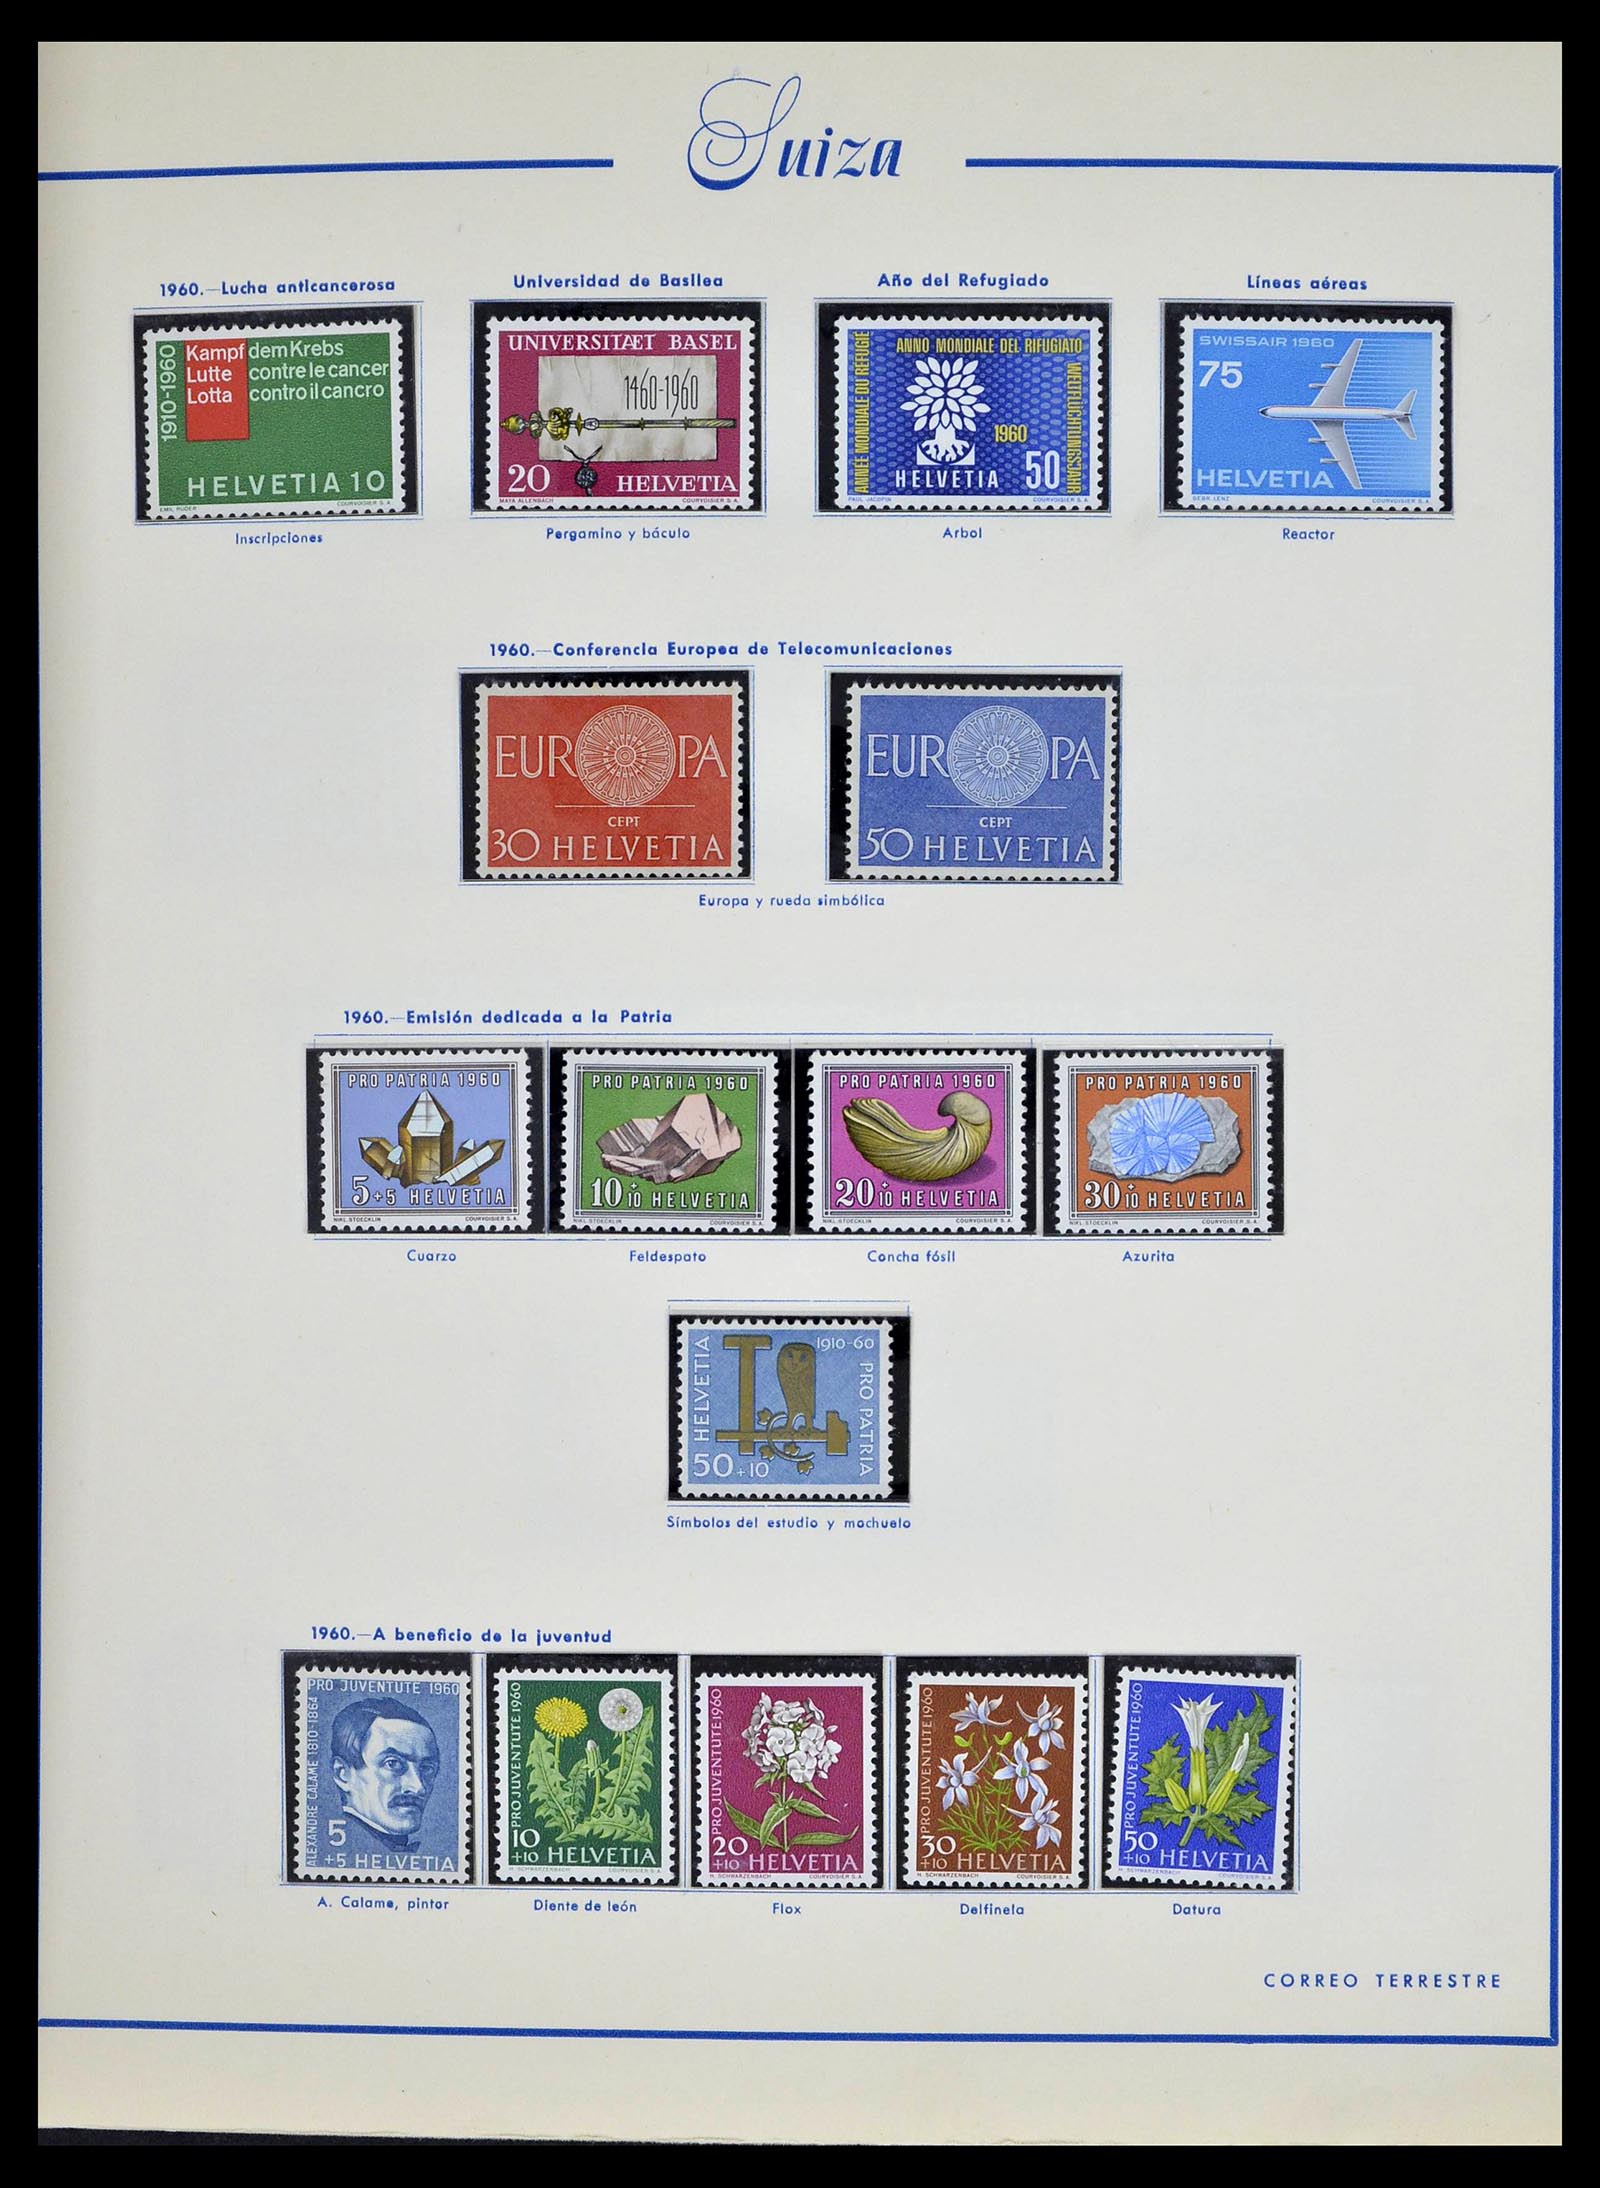 39217 0039 - Stamp collection 39217 Switzerland 1850-1986.